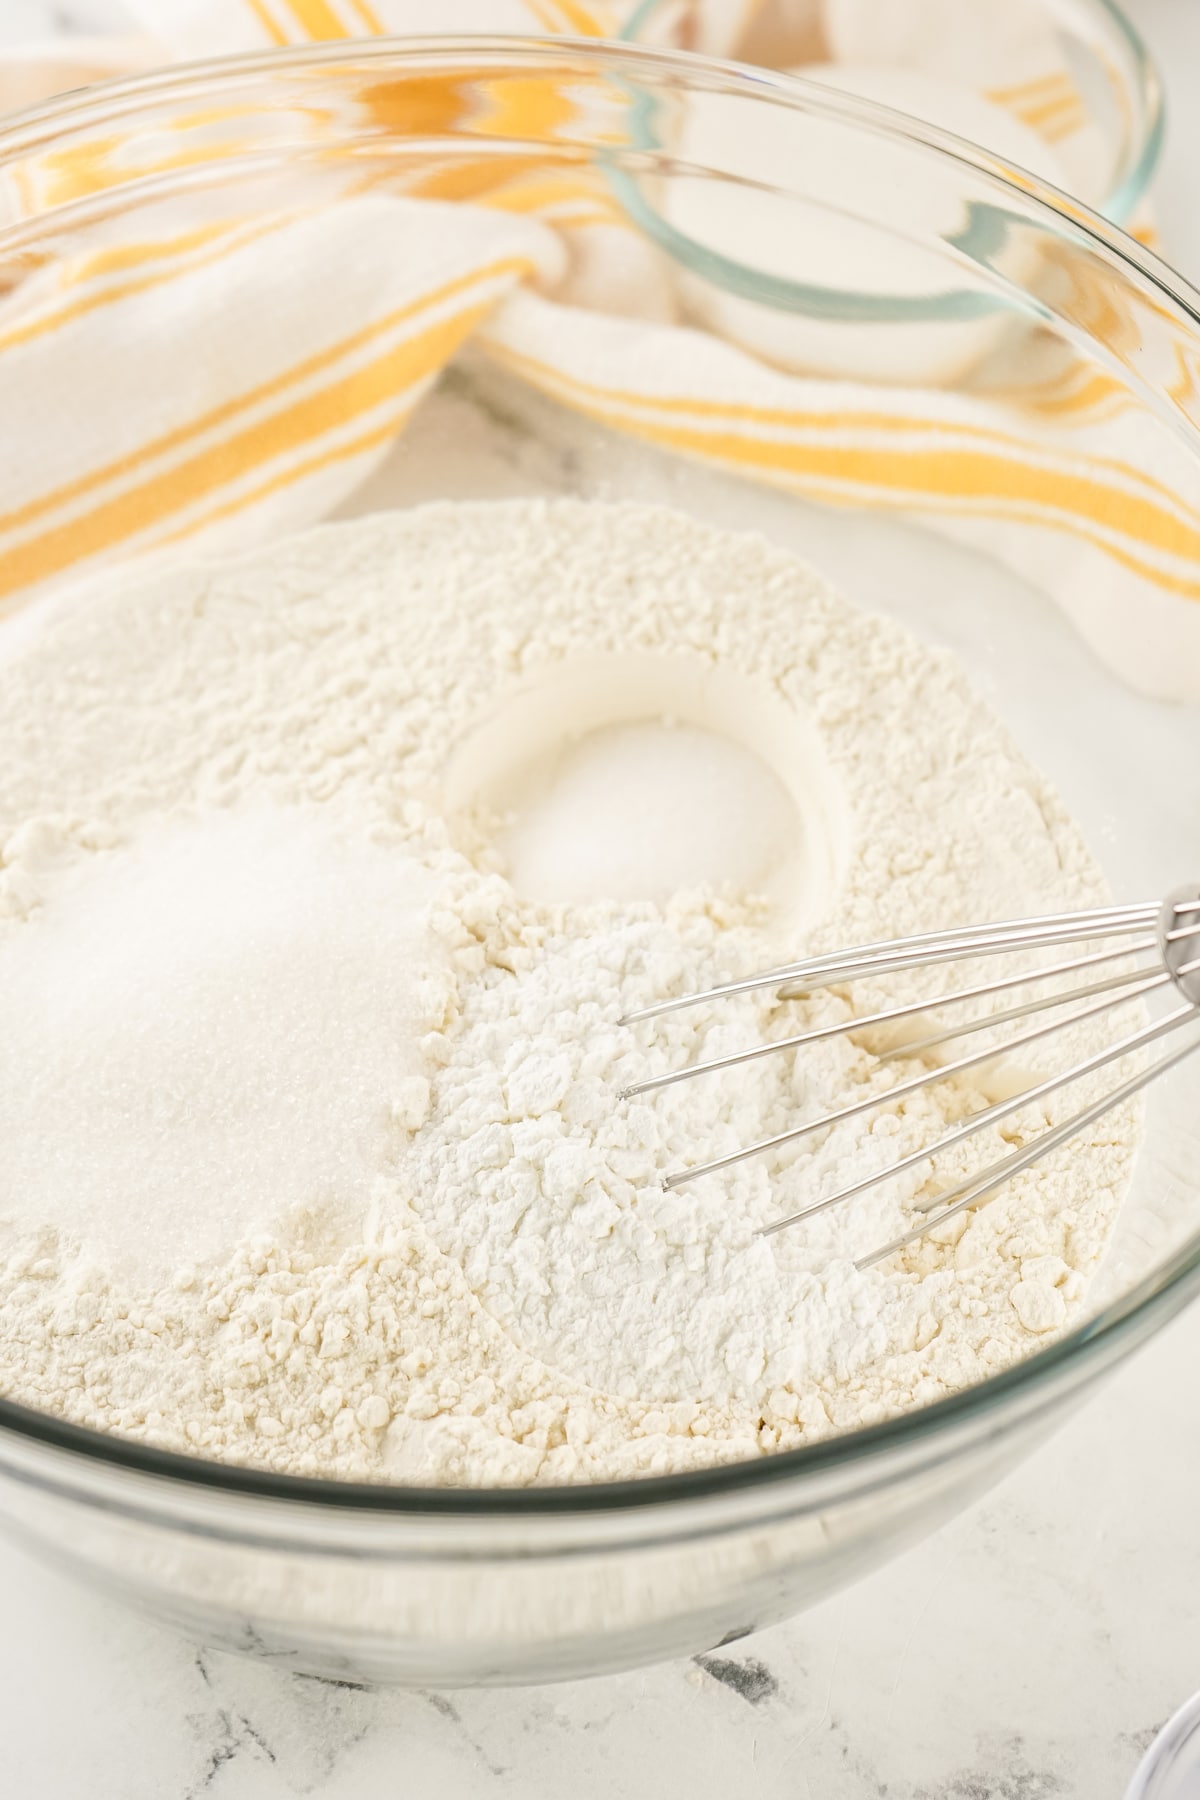 Mixing the ingredients to create homemade Pancake Mix